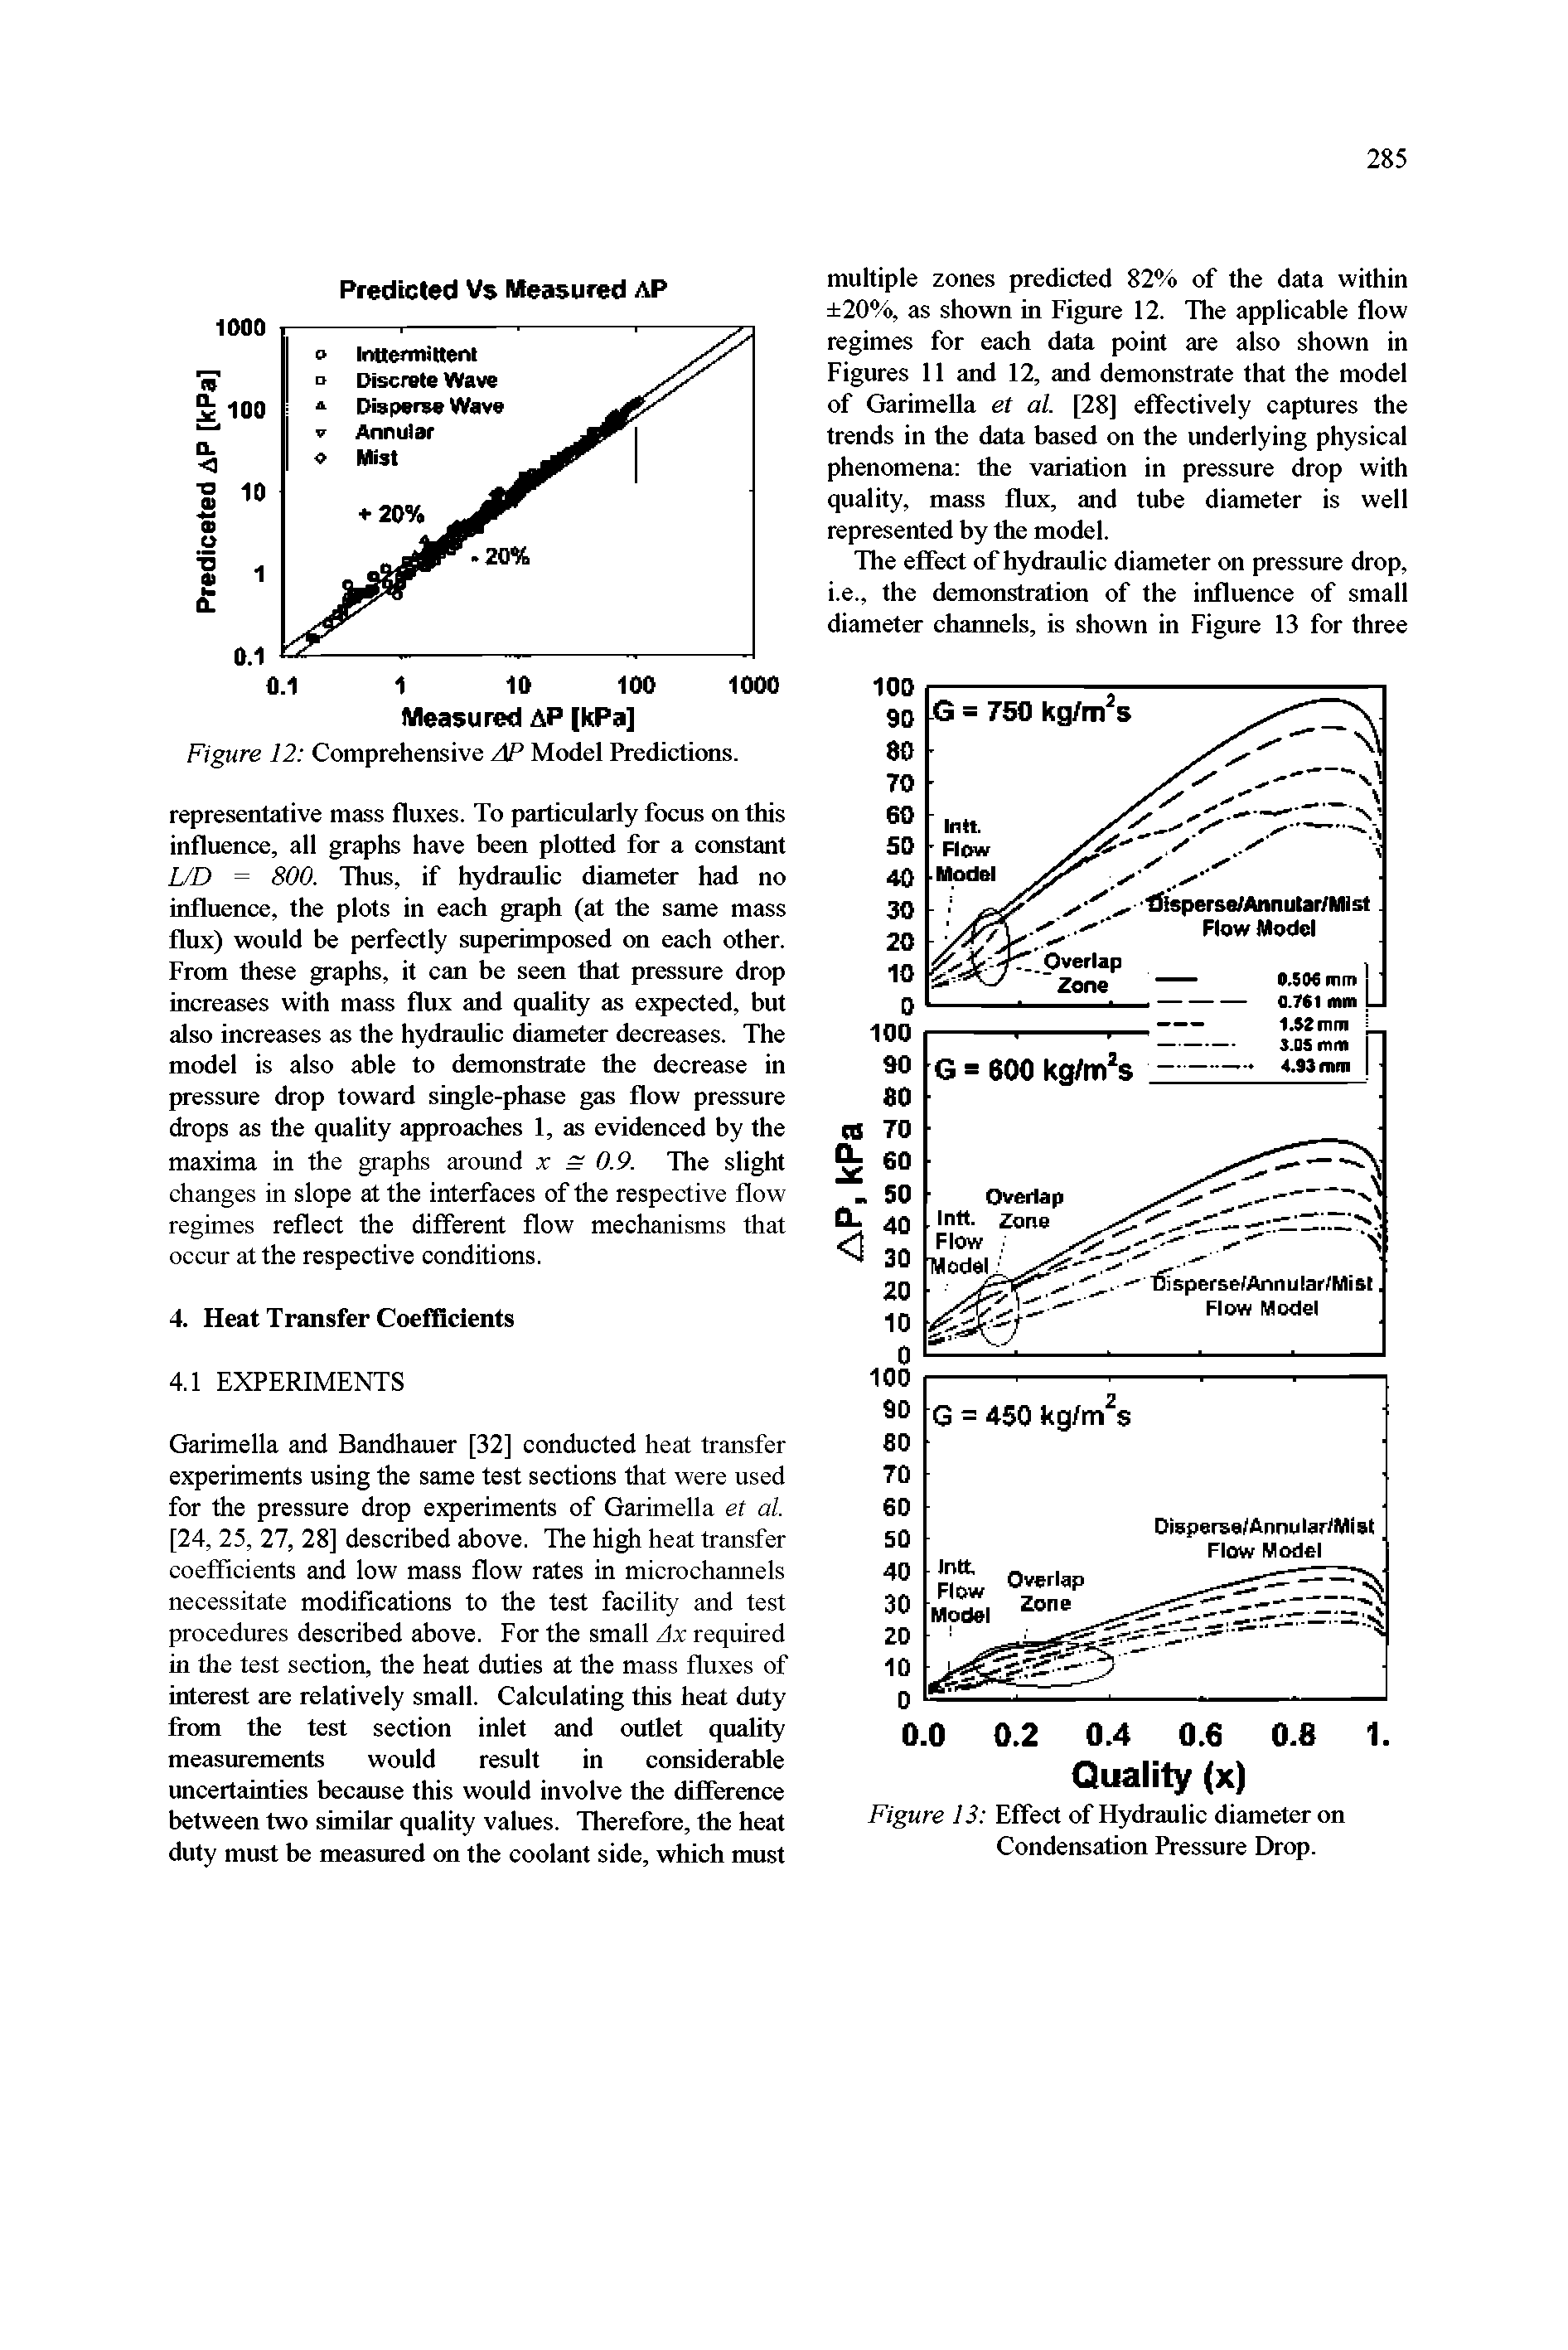 Figure 13 Effect of Hydraulic diameter on Condensation Pressure Drop.